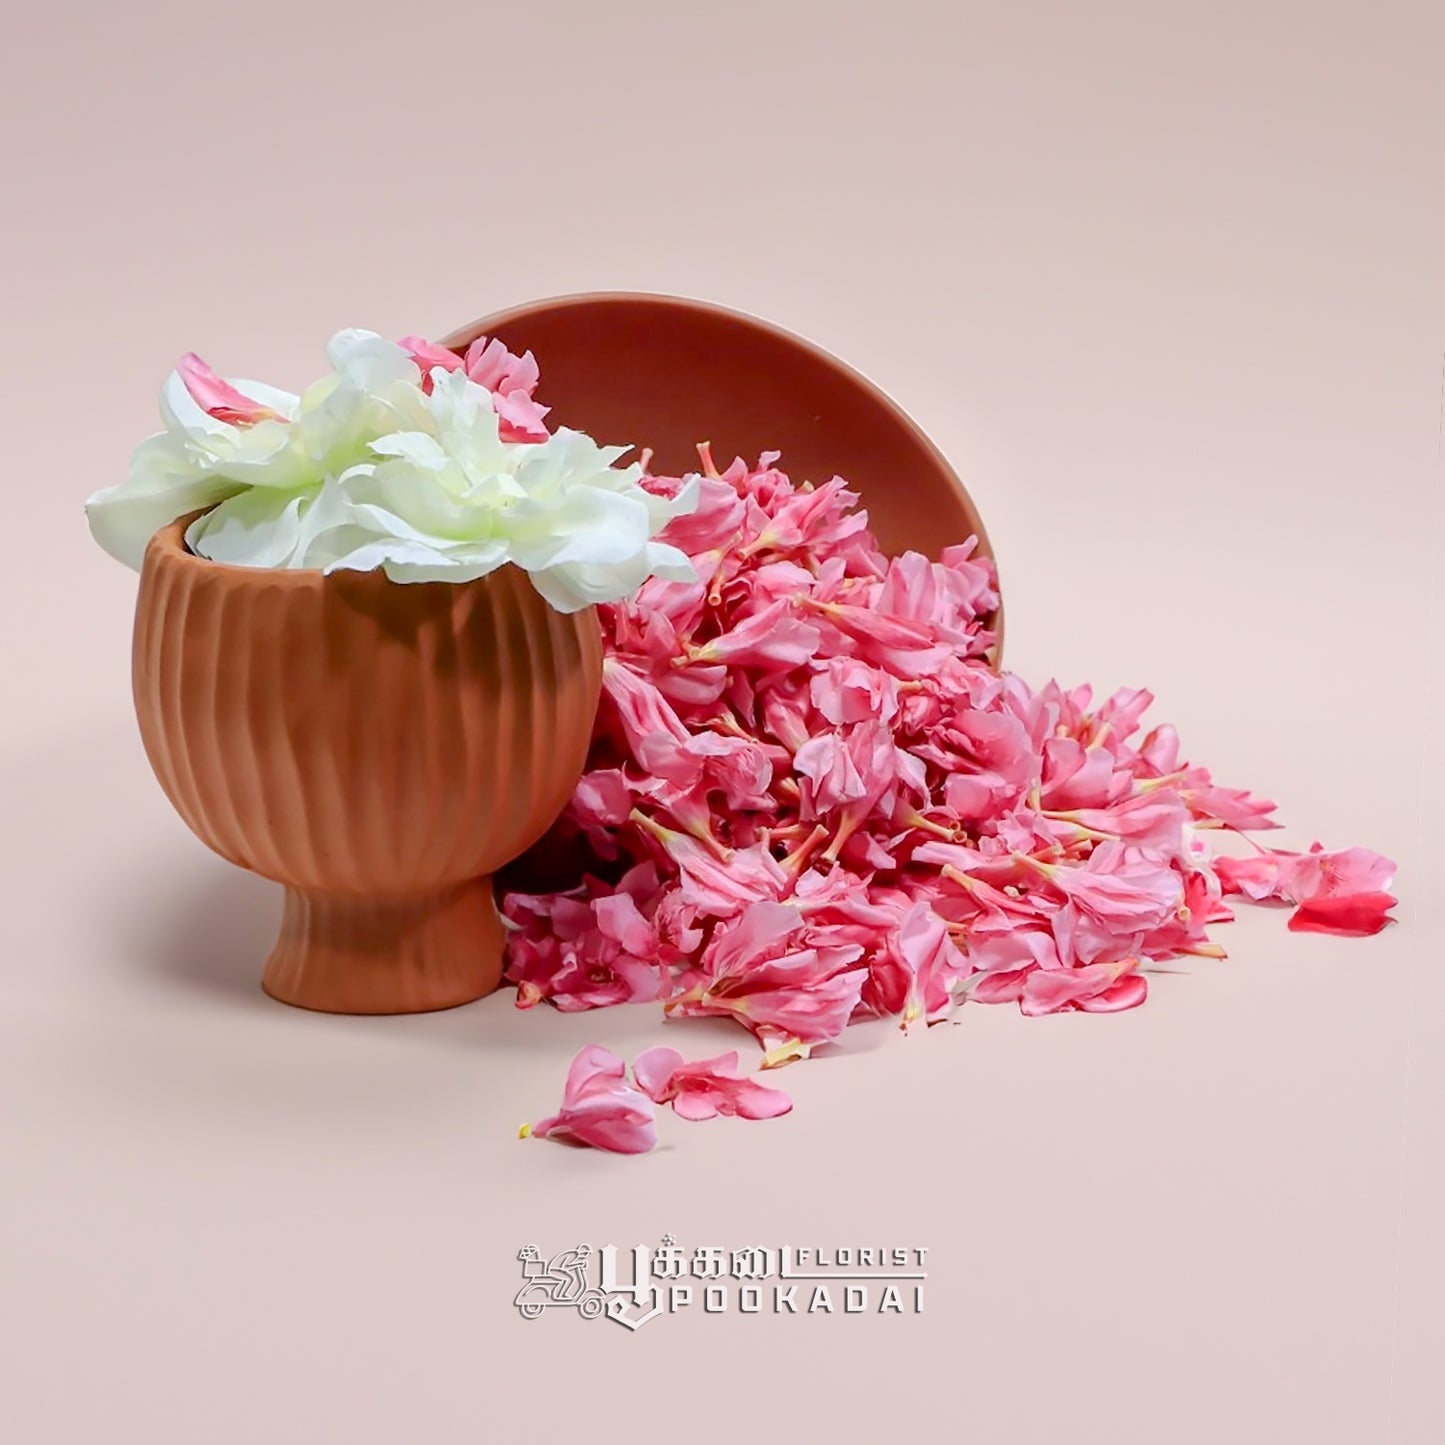 Fresh Arali / Ganneru Flowers - Pookadai Florist Toronto